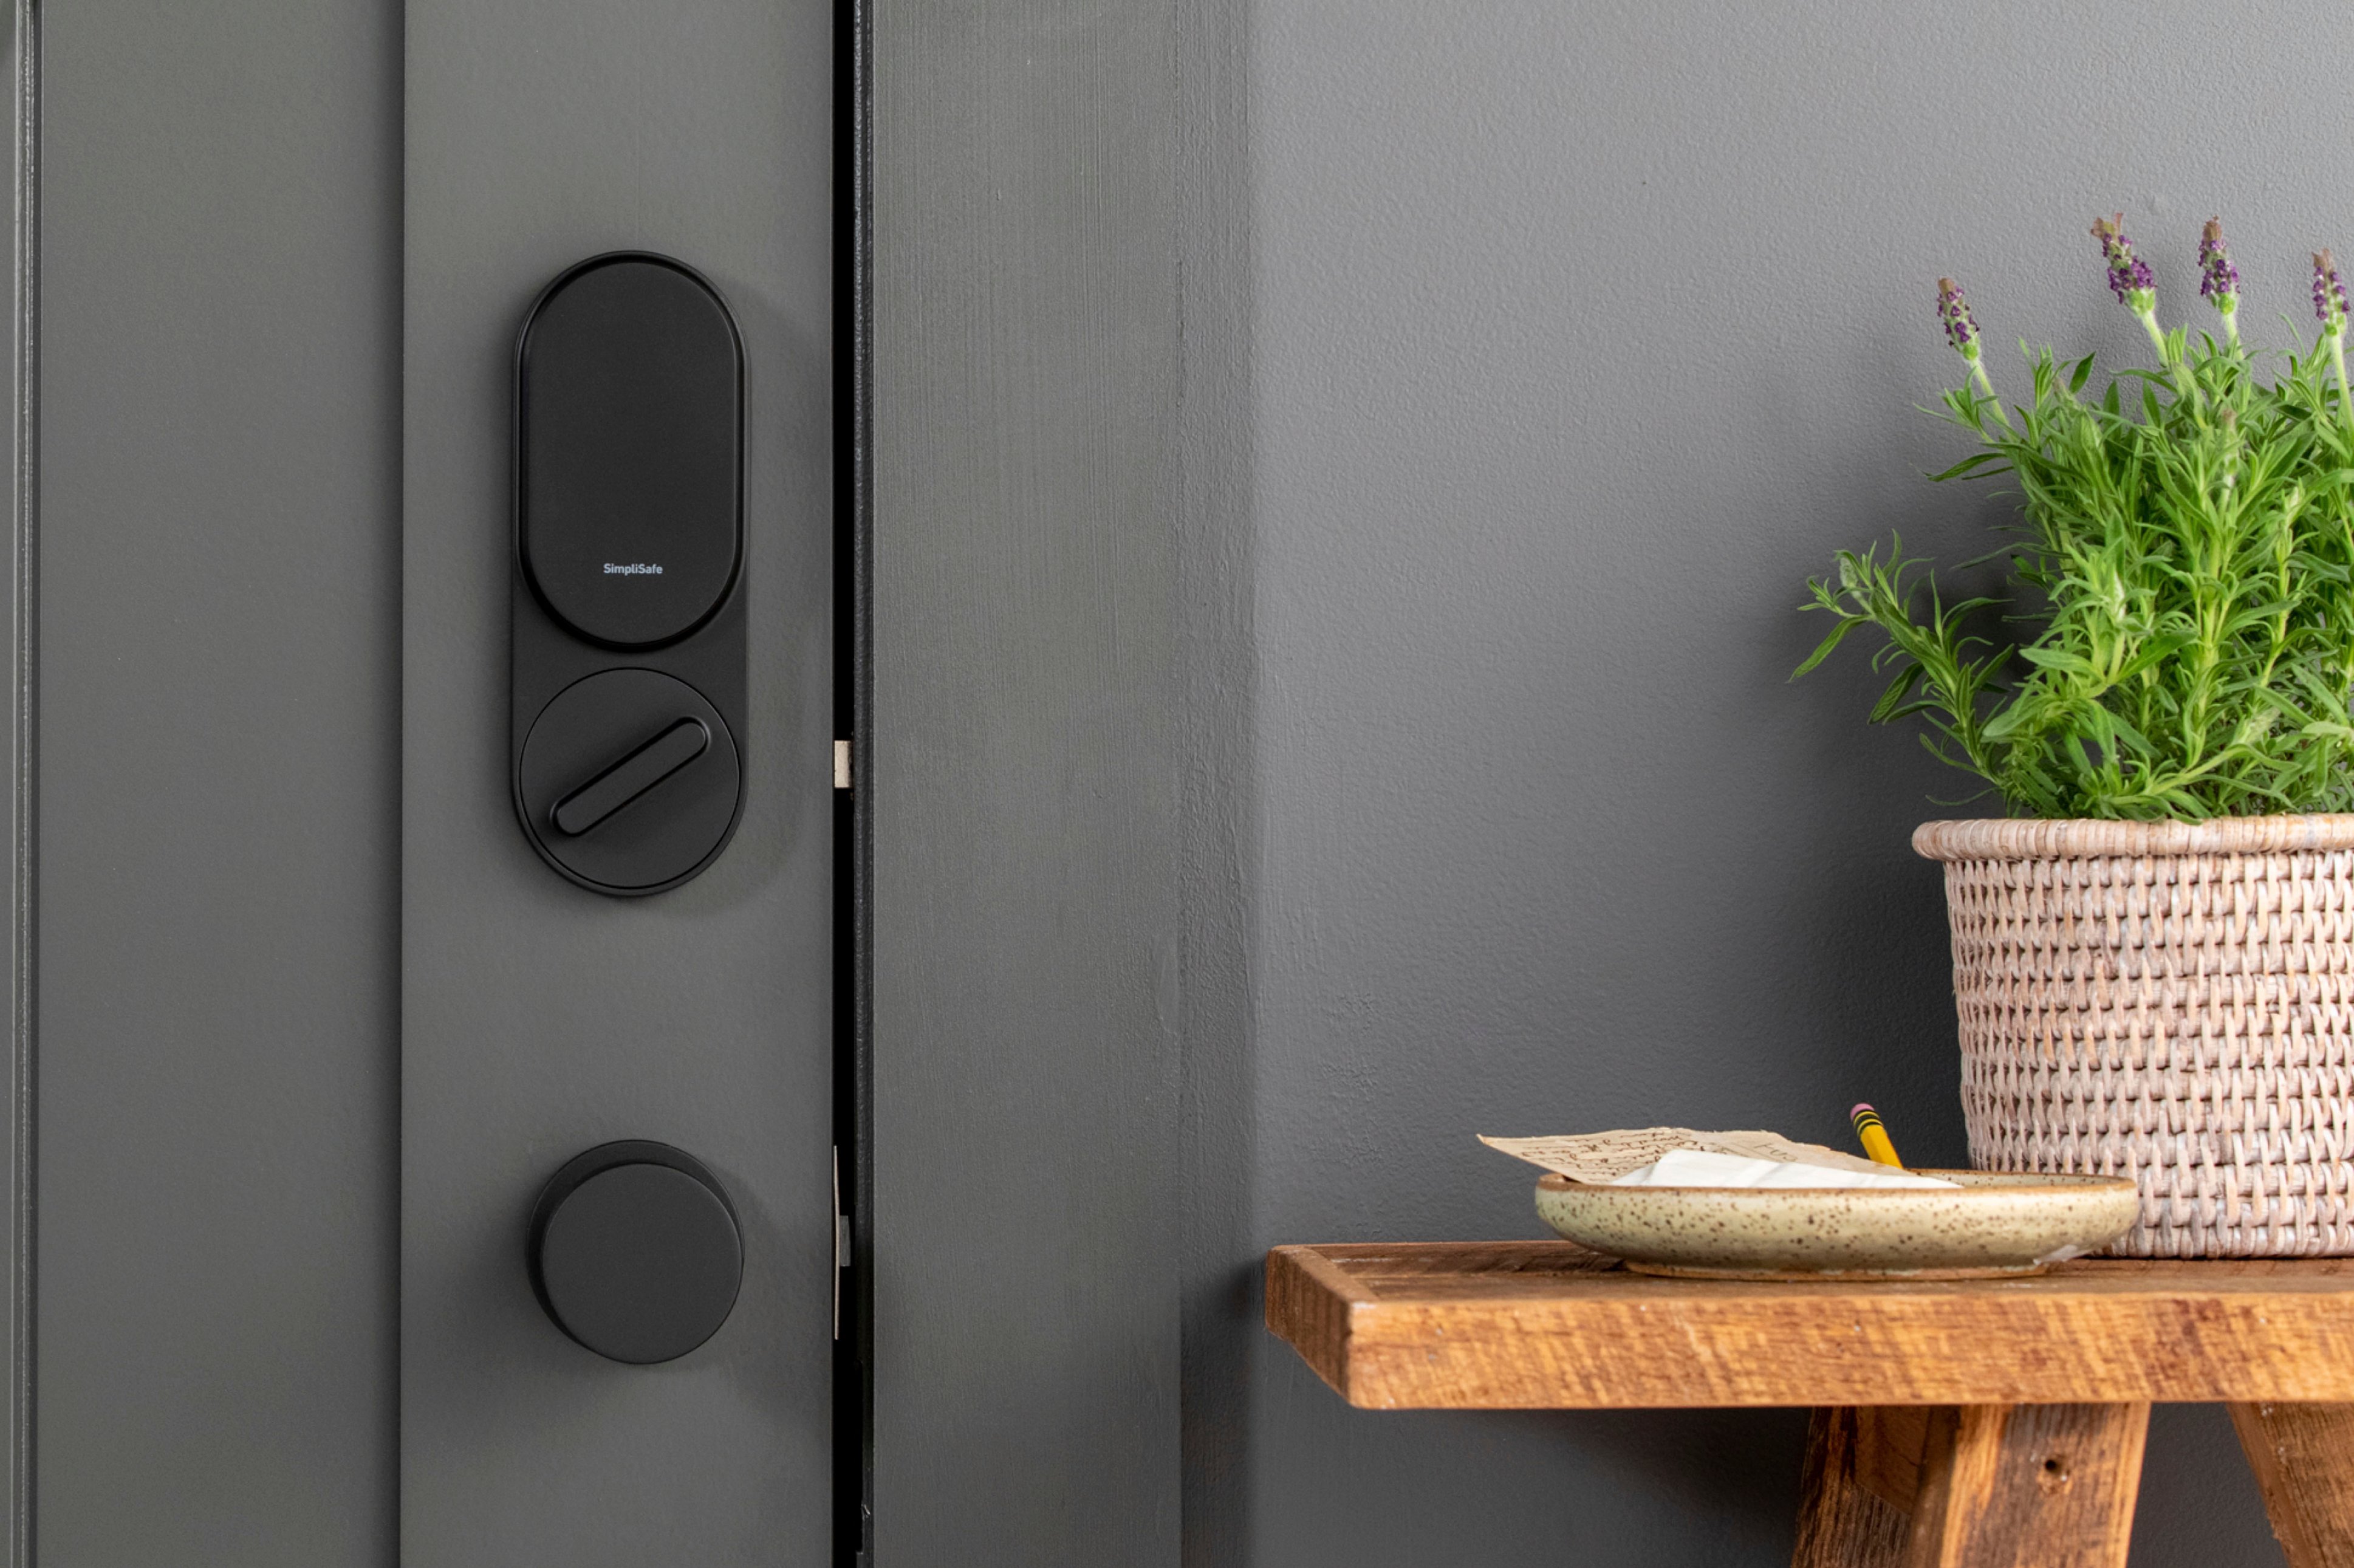 SimpliSafe - Smart Lock (Black) - Compatible with Gen 3 Home Security System - Black